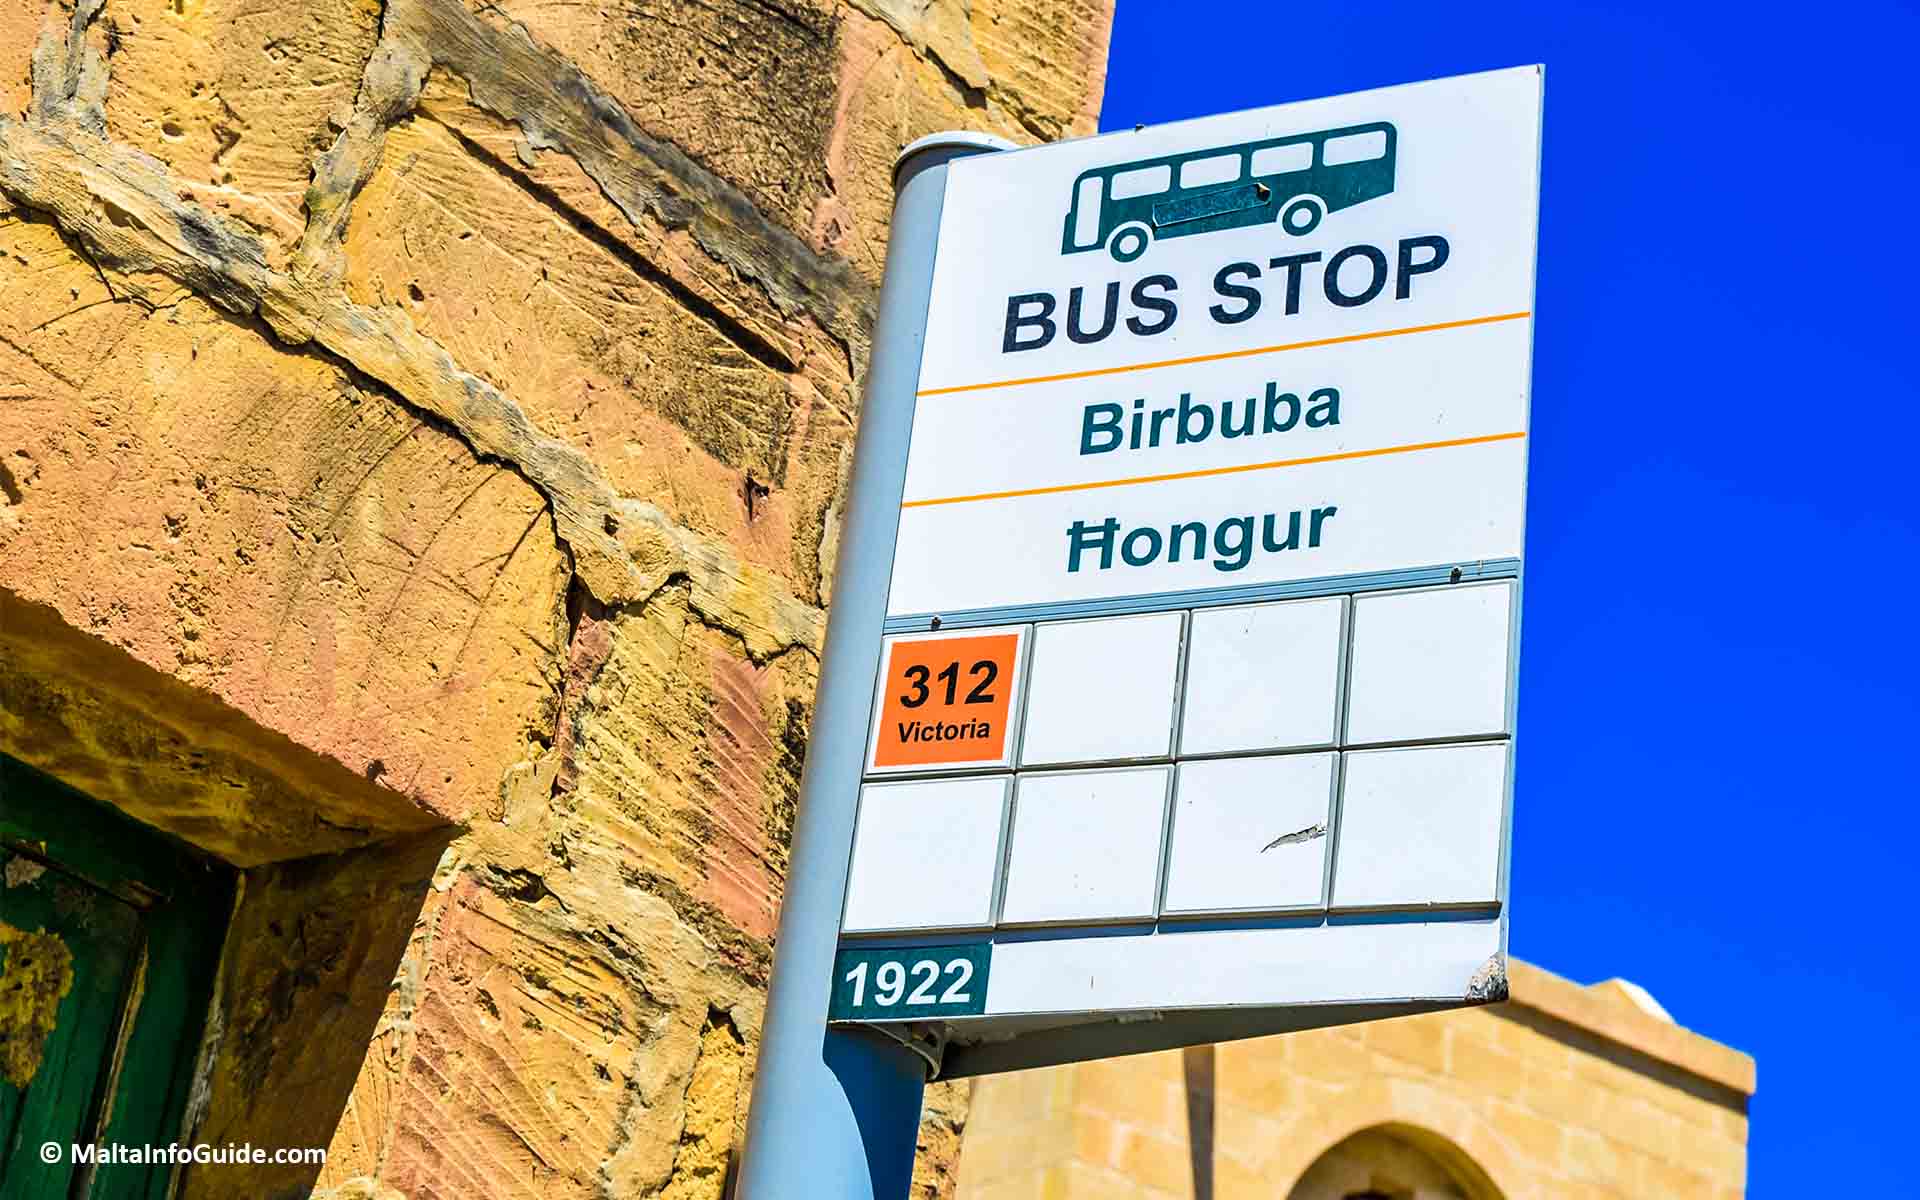 One of Gozo's bus stops.